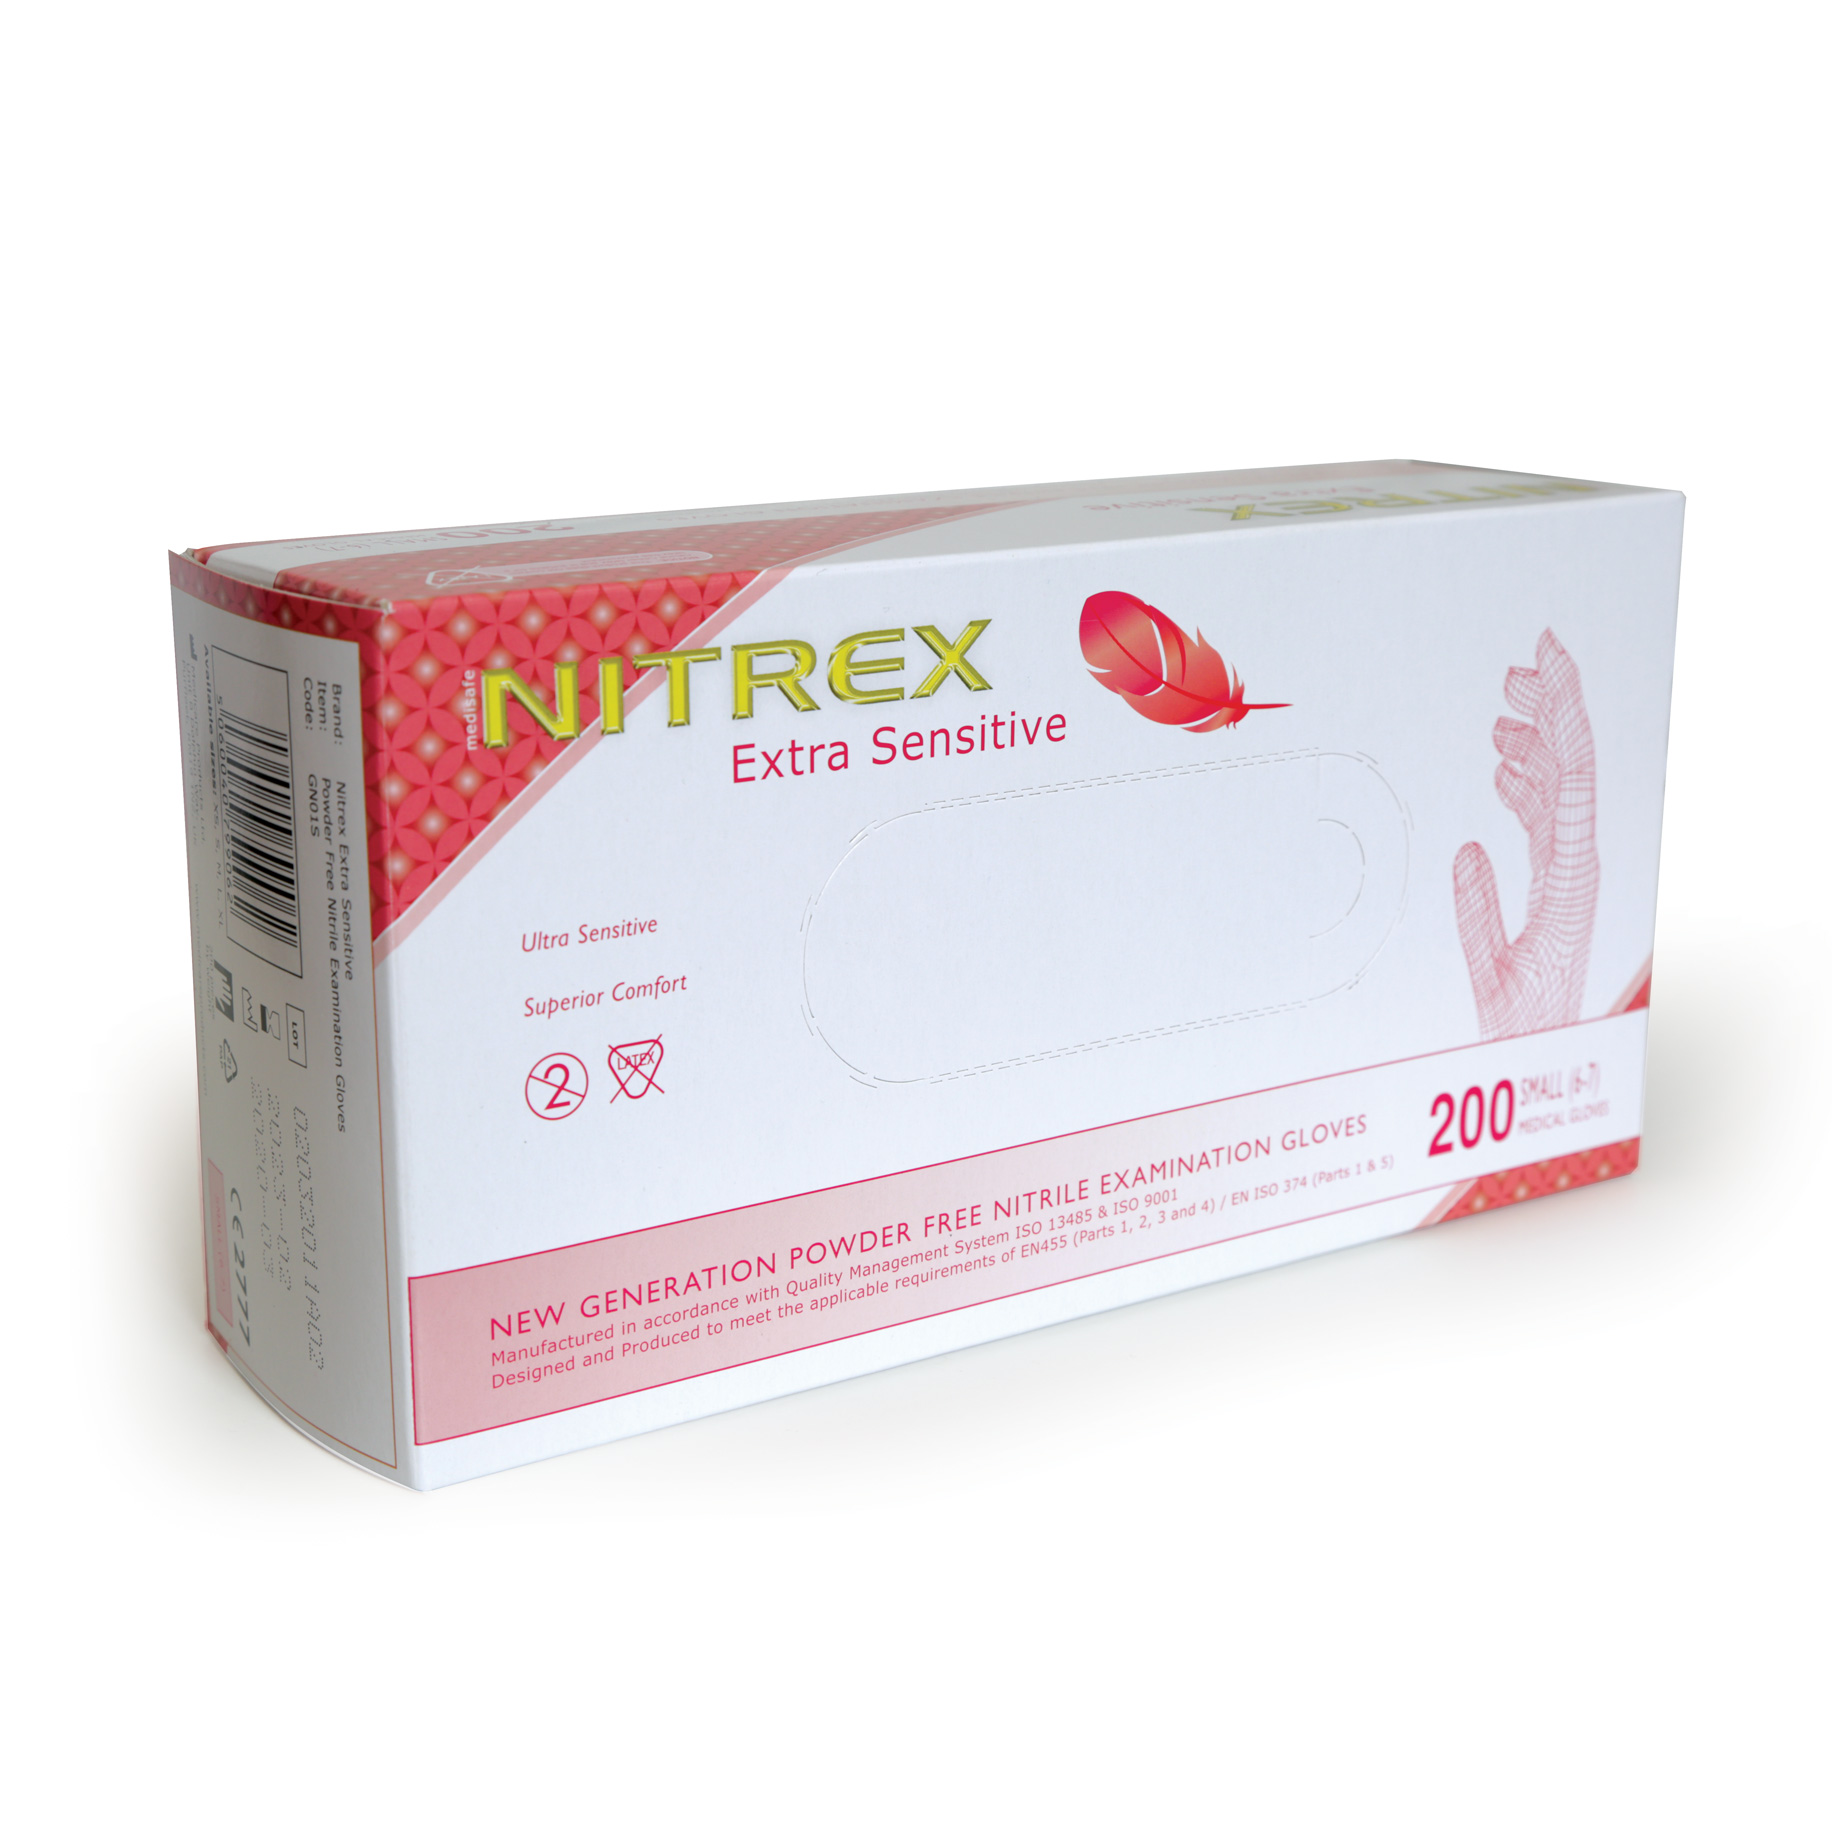 Nitrex Extra Sensitive Powder free Nitrile Gloves Small 